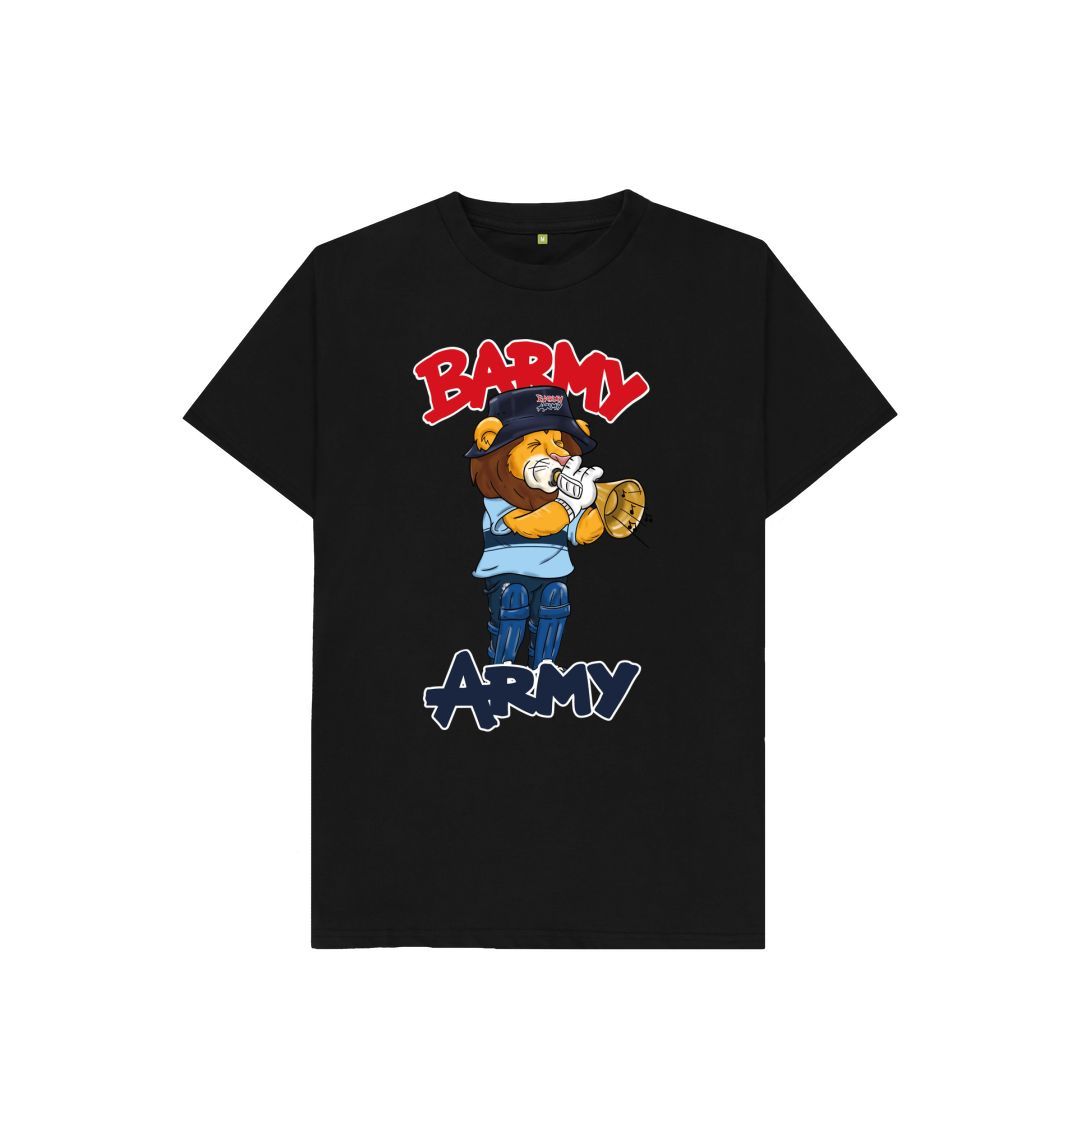 Black Barmy Army Trumpet Mascot Tees - Juniors